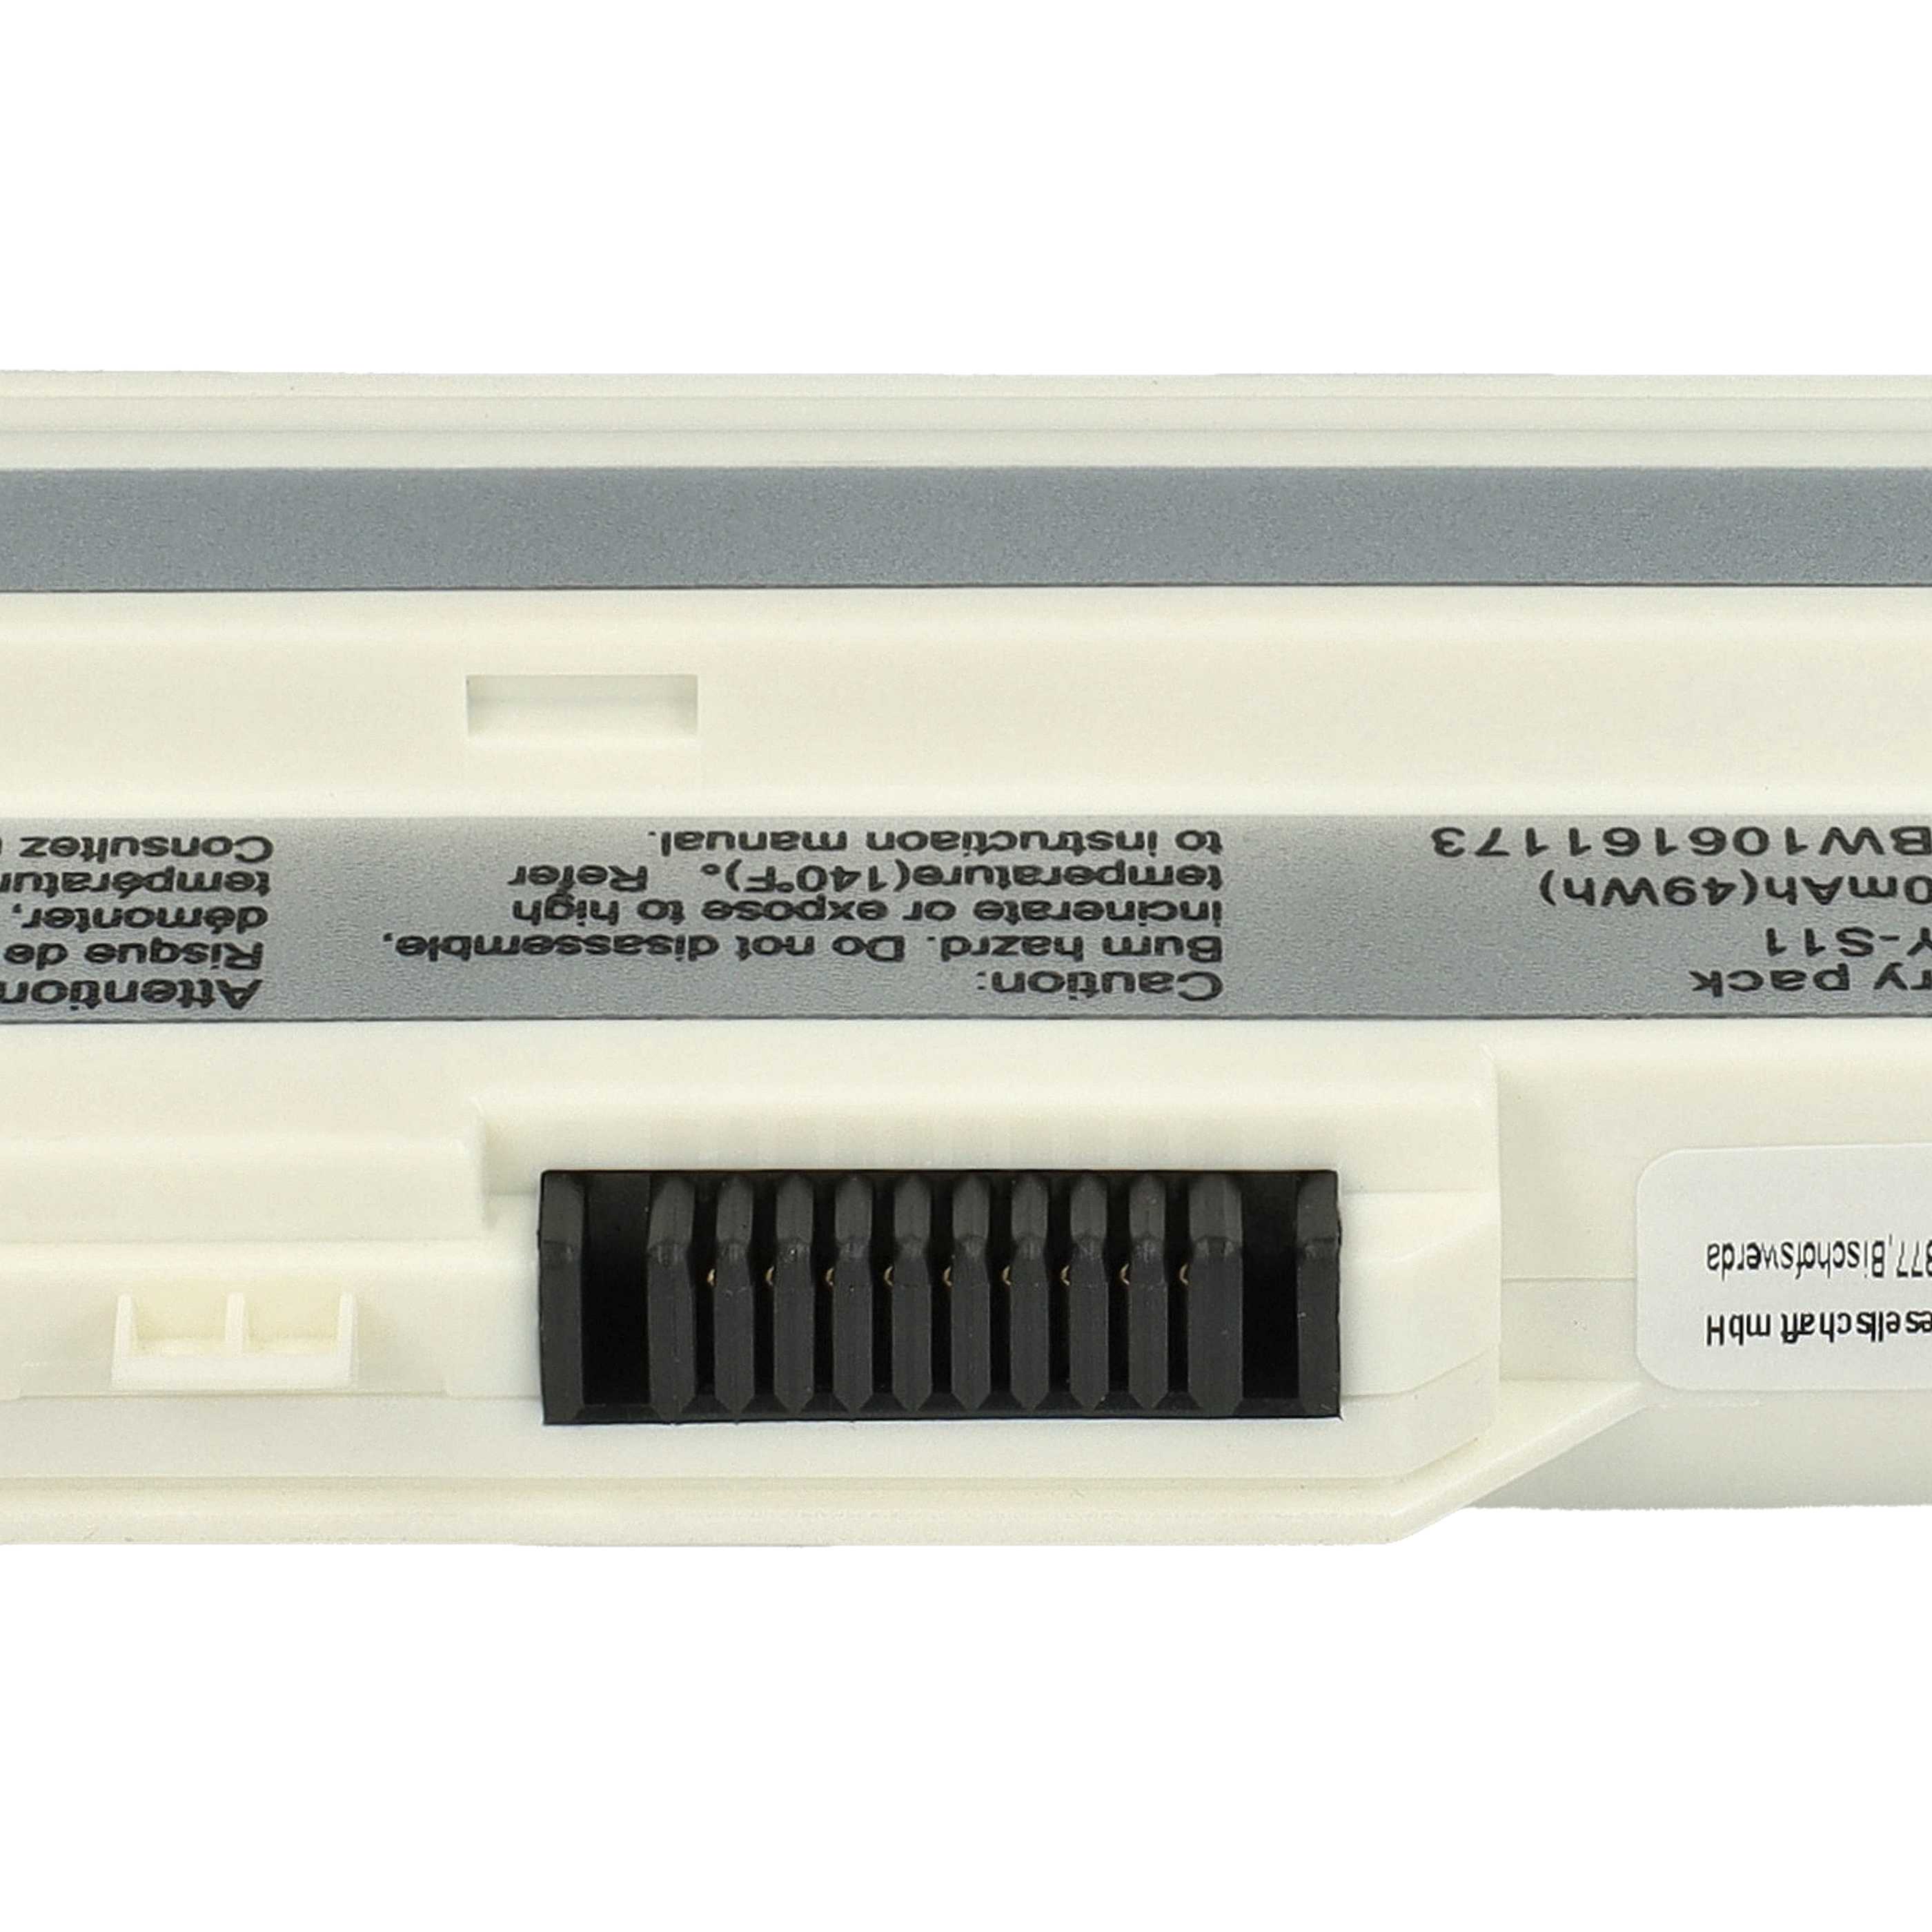 Batería reemplaza Medion BTY-S11 para notebook Medion - 4400 mAh 11,1 V Li-Ion blanco